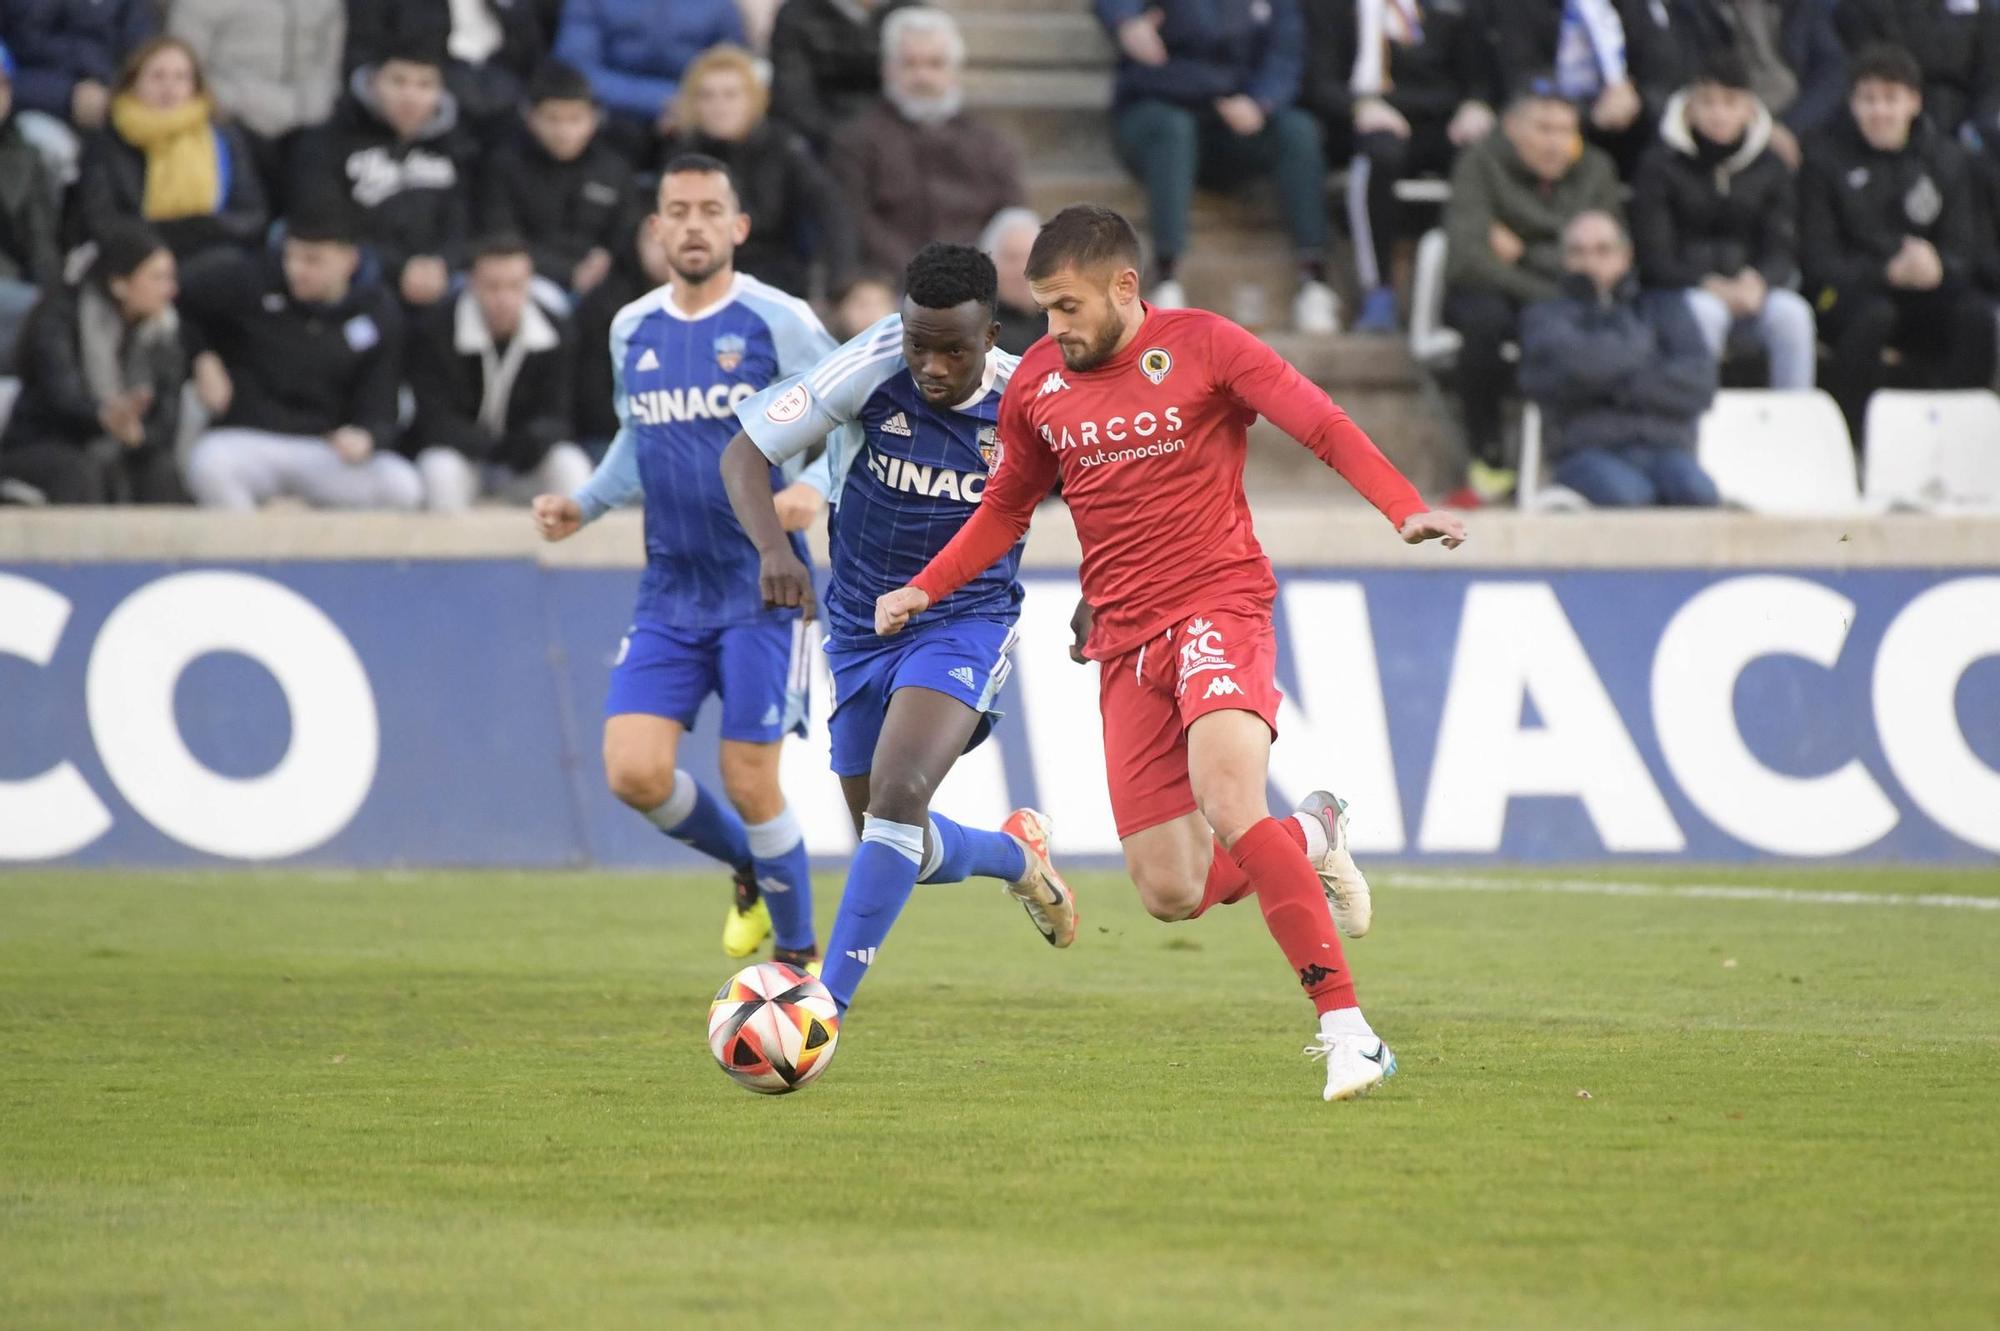 Victoria del Hércules en Lleida (0-1)